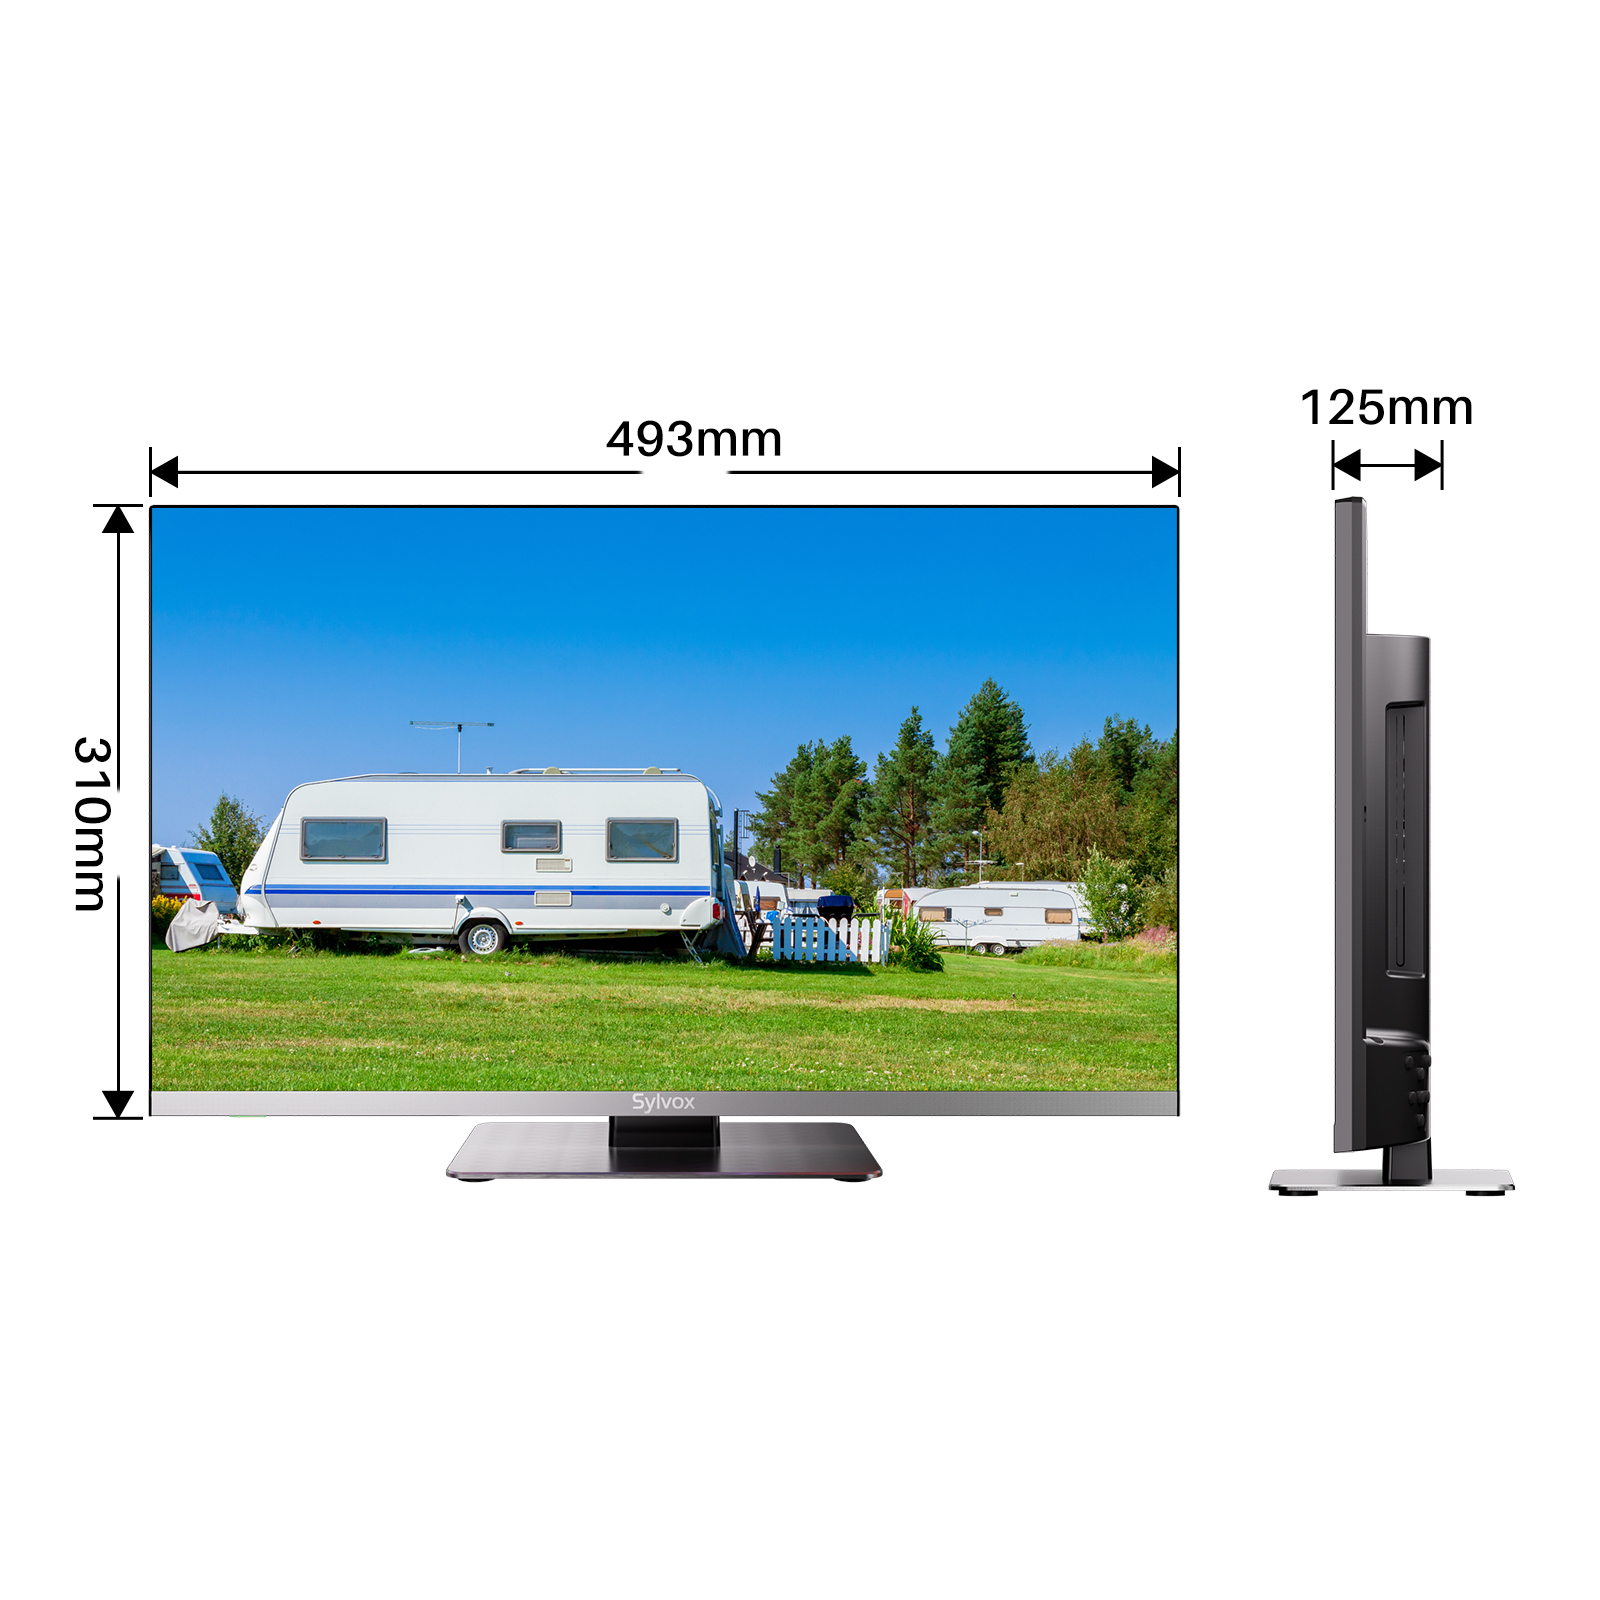 TV 12V / 55,88 Eingebauter (Flat, Player DVD Zoll cm, Zoll 22 TV 48.25MHz-863.25MHz 22 TV) SYLVOX Full-HD, SMART